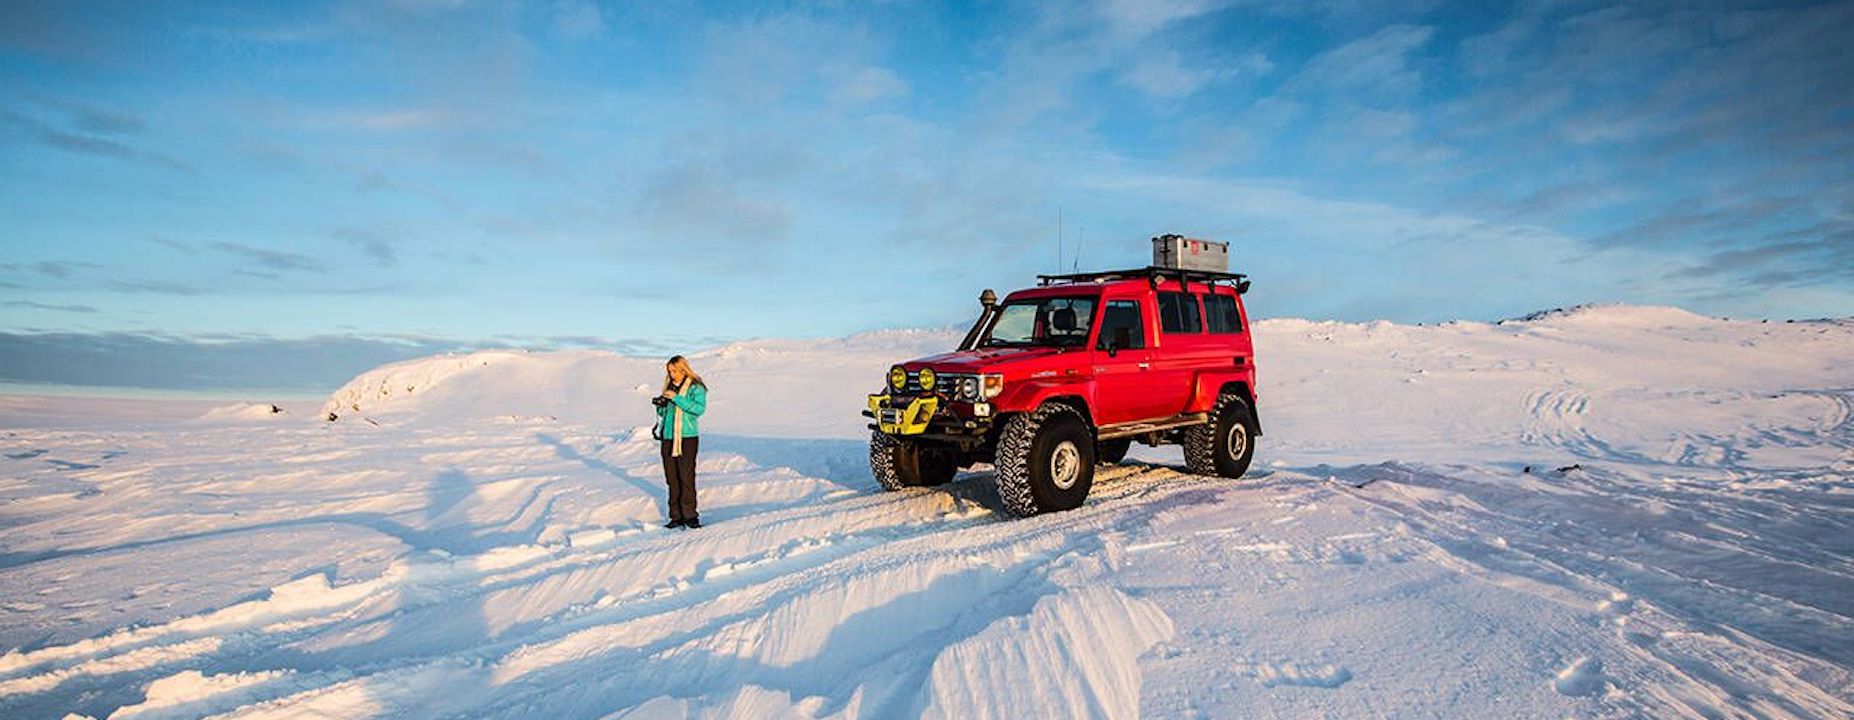 5 Day Northerlight PREMIUM Iceland adventure tour, Self-Drive adventure tour, 4 Wheel drive, zodiac, snow bike, helicopter and glacier 